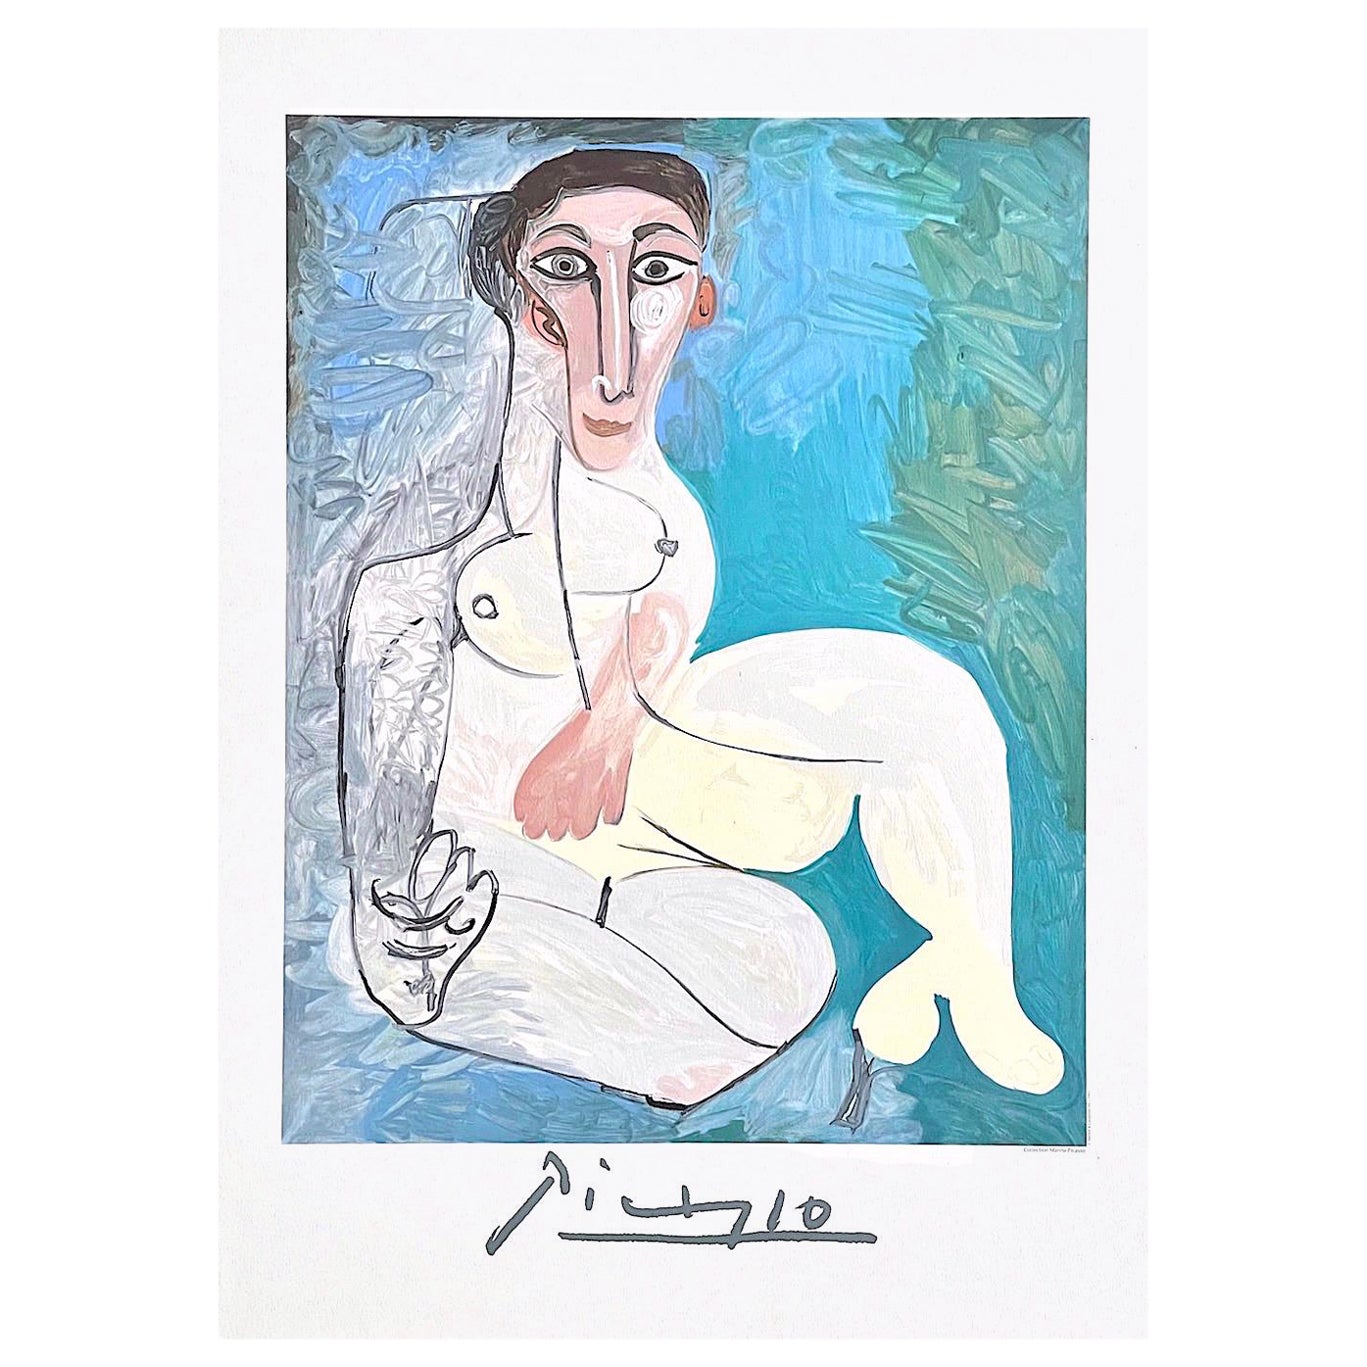 (after) Pablo Picasso Nude Print – Femme Nu Assise dans l''herbe, Lithographie, Abstrakter sitzender Akt, Aqua, Rosa, Grau